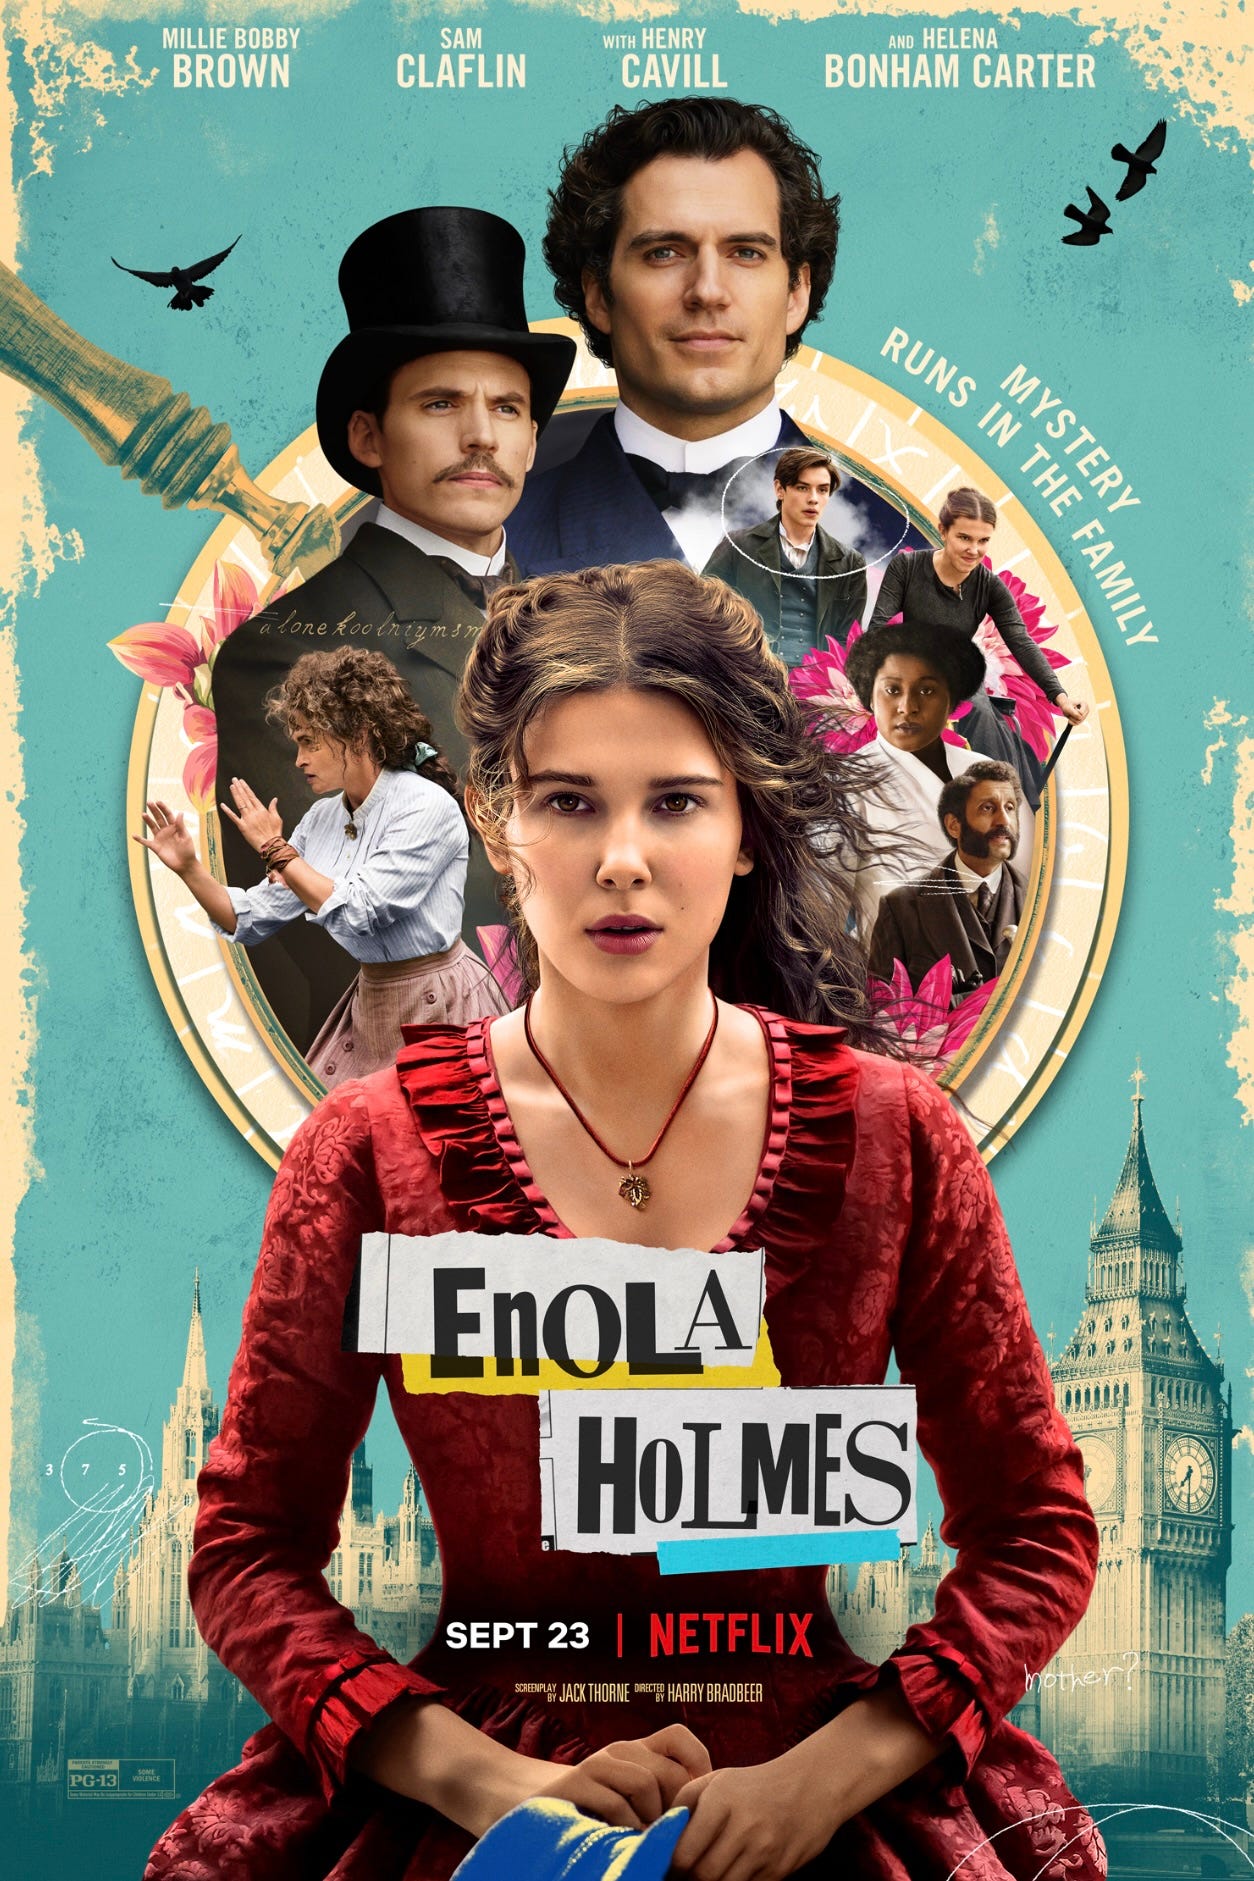 Enola Holmes, Millie Bobby Brown Netflix Film Adaptation Promo Poster